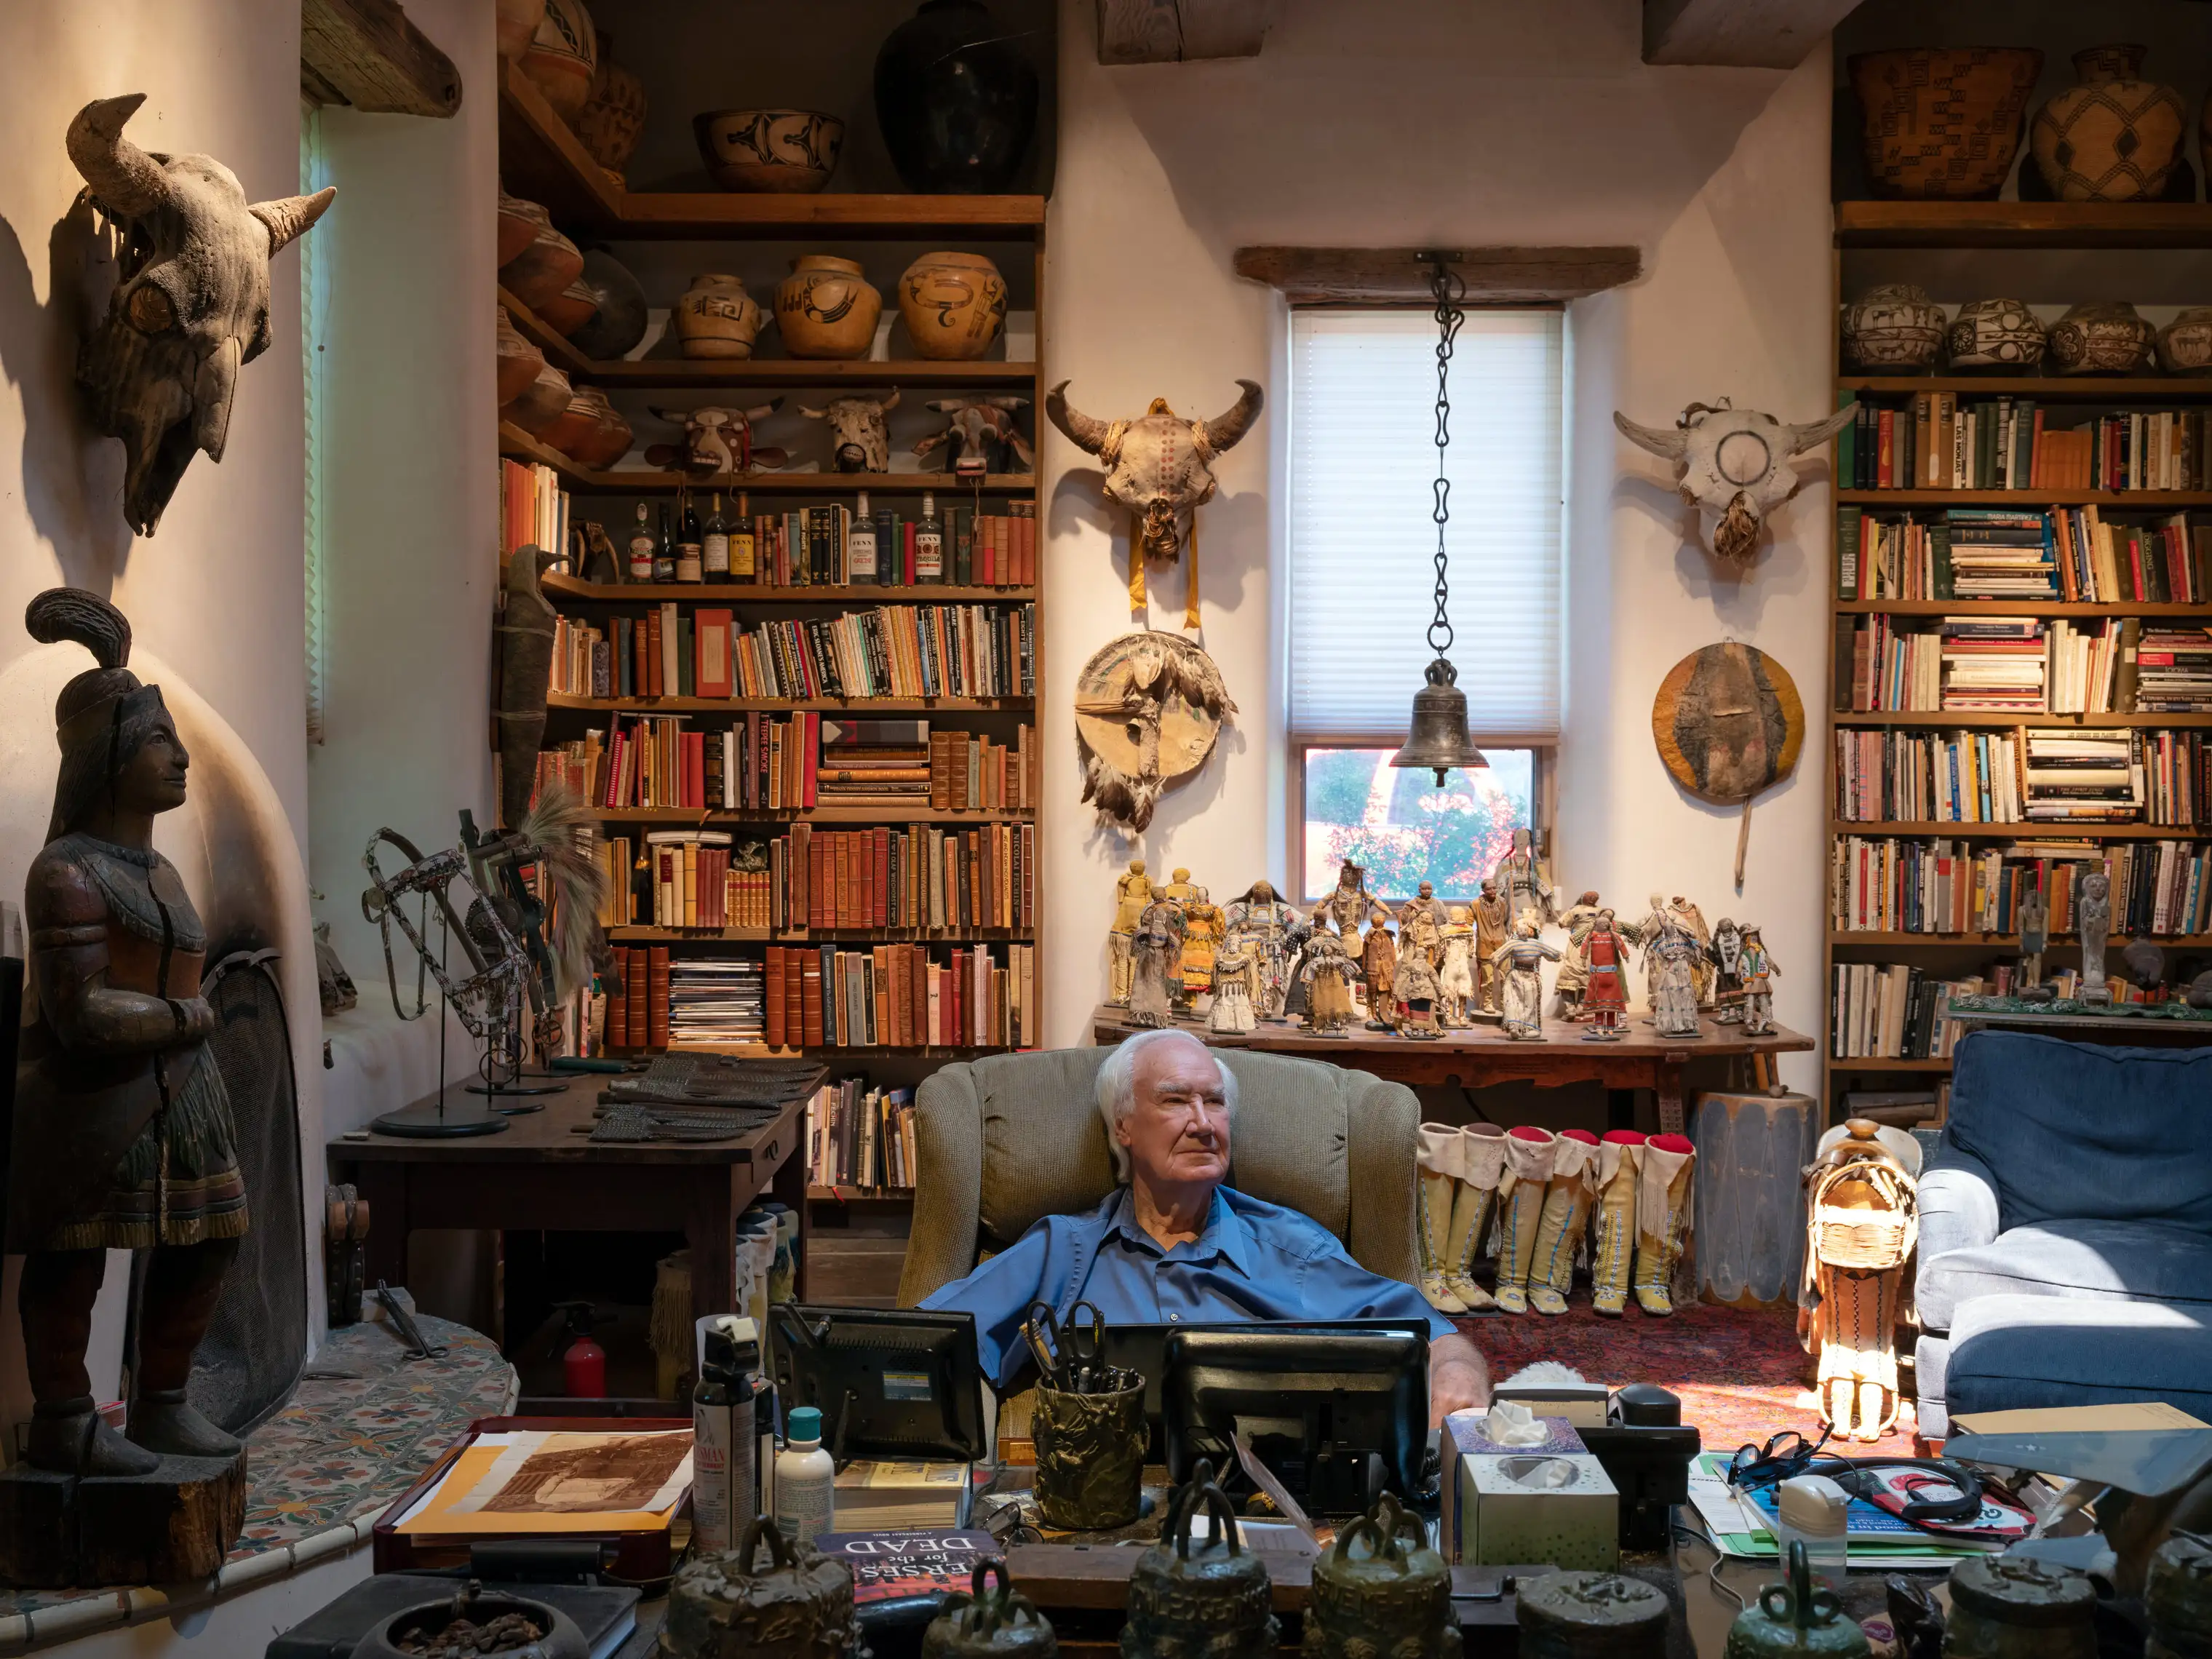 Forrest Fenn in his library, Santa Fe, NM, May 27, 2019.